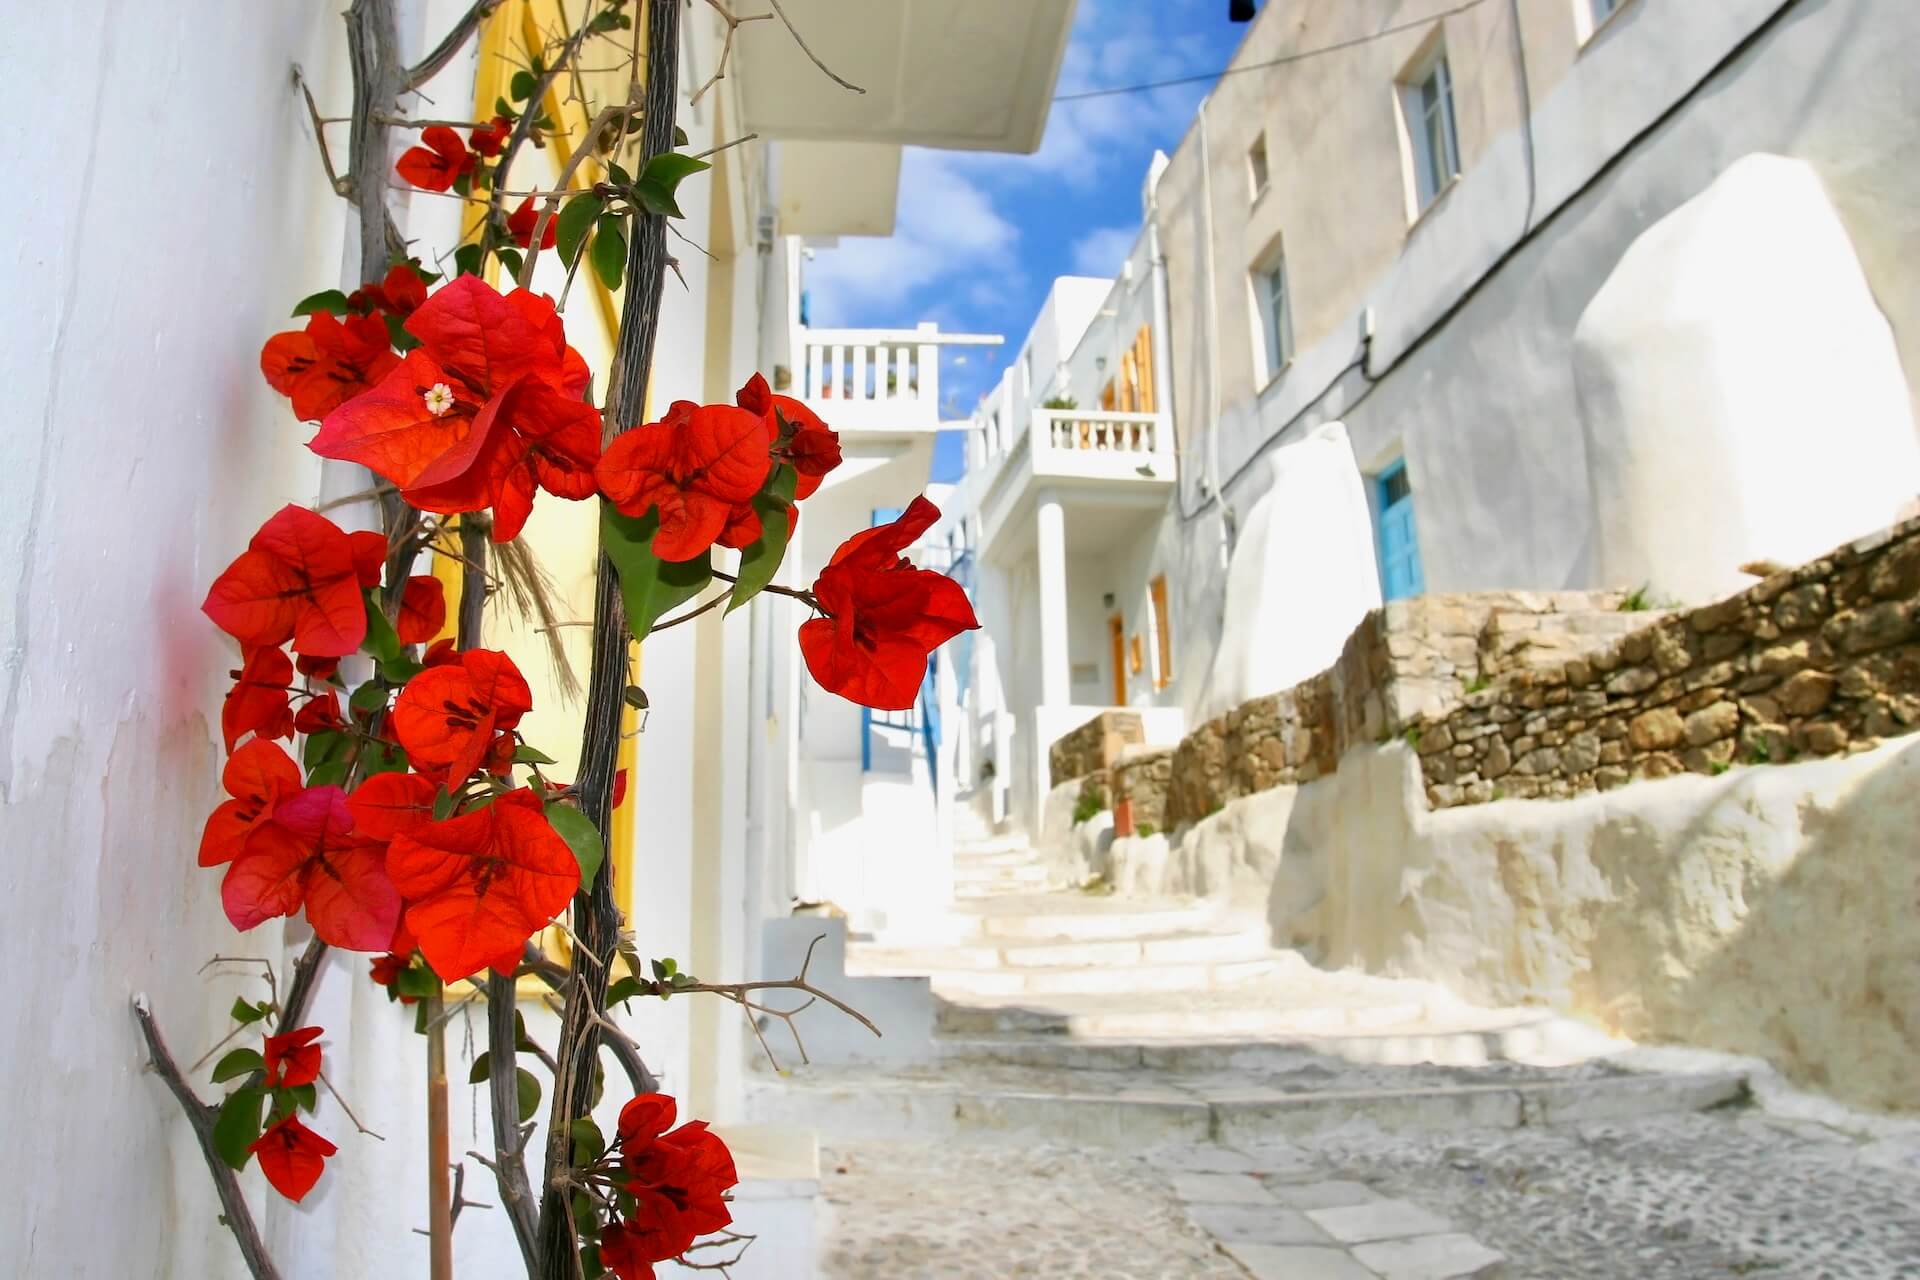 Red flowers on the street in Mykonos town